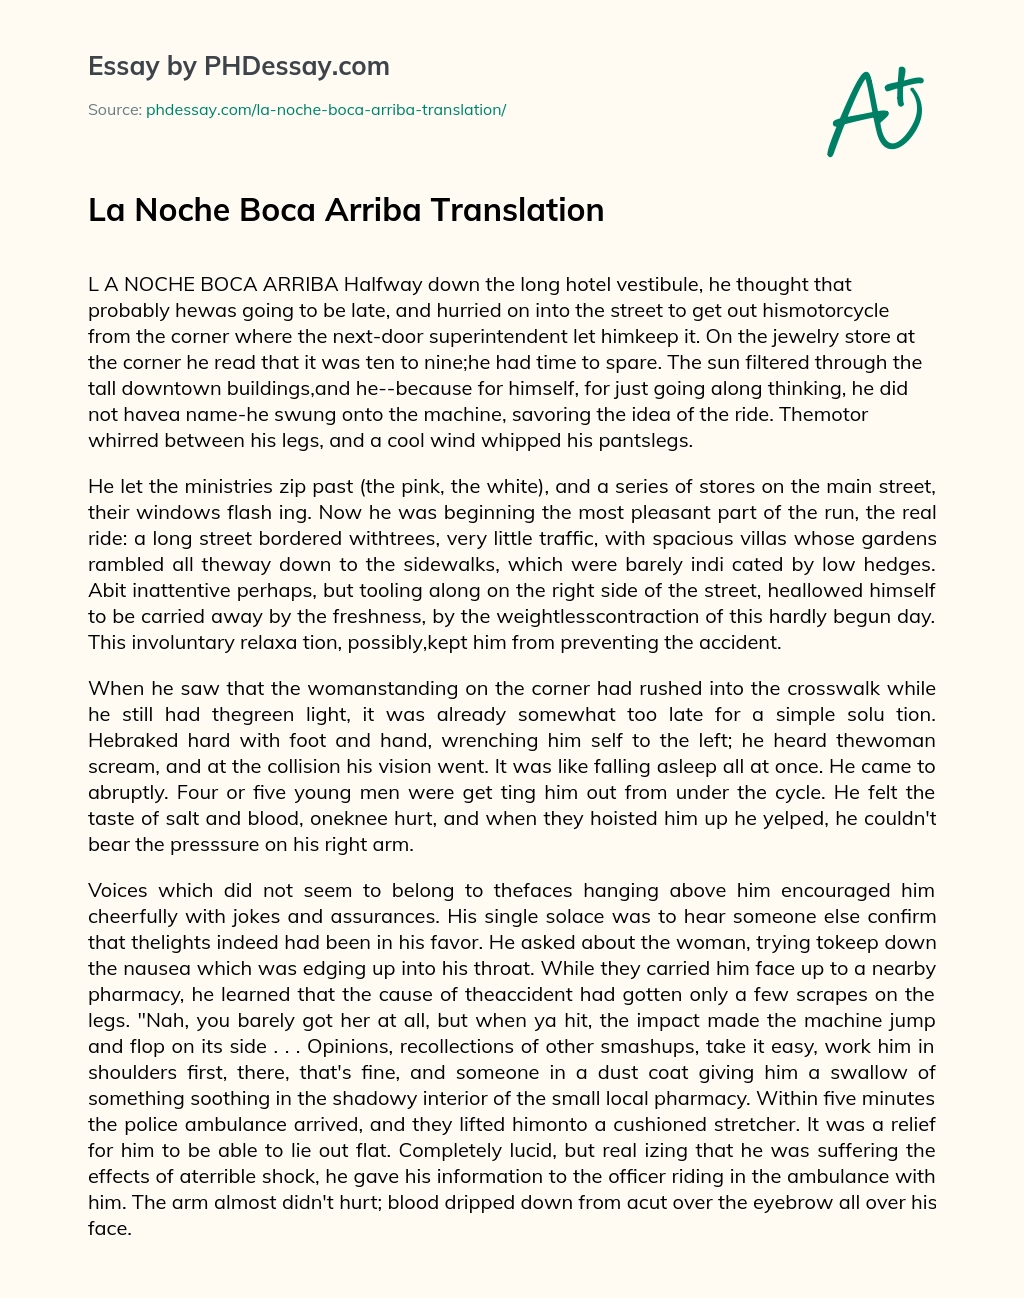 La Noche Boca Arriba Translation essay